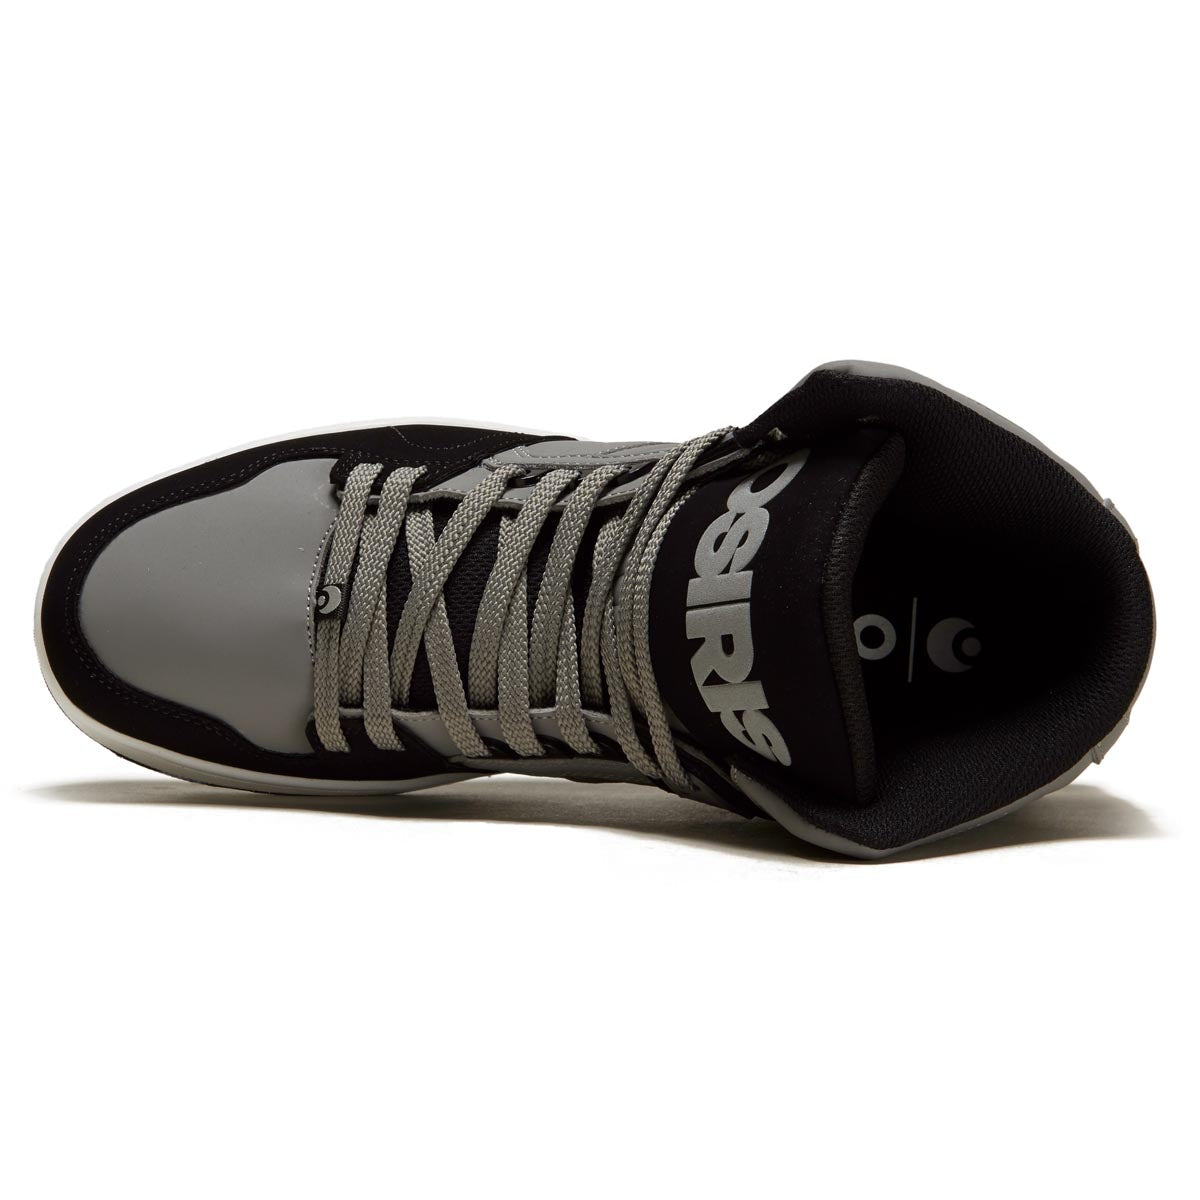 Osiris Nyc 83 Clk Shoes - Black/Grey/White image 3